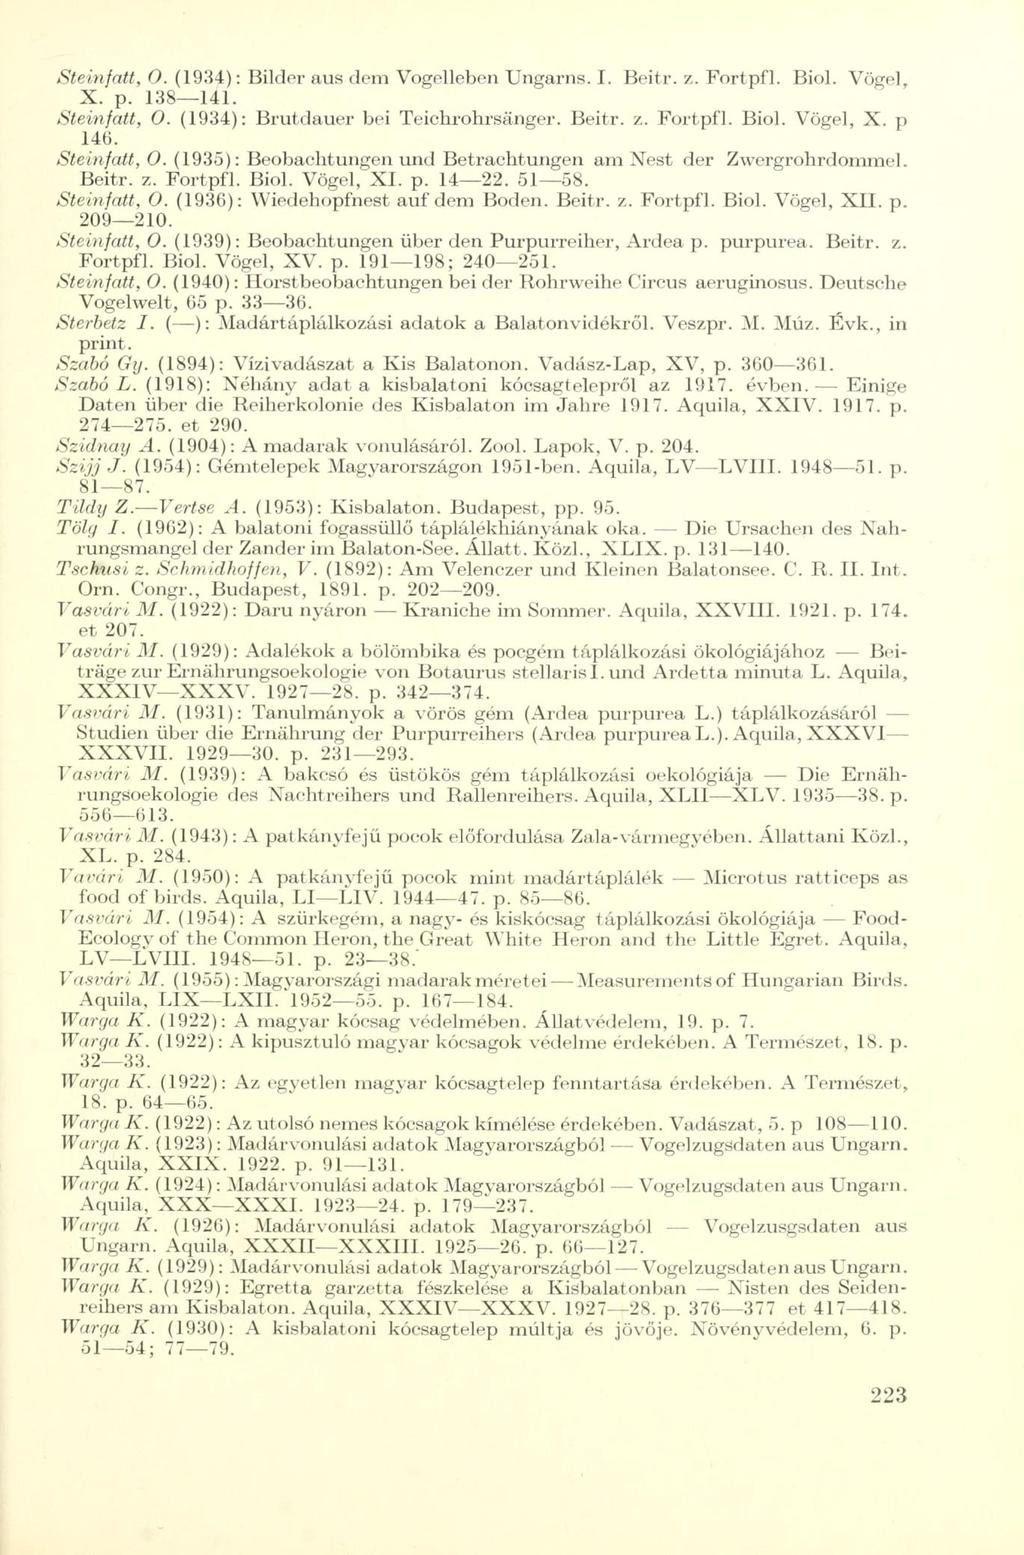 Steinfatt, O. (1934): Bilder aus dem Vogelleben Ungarns. I. Beitr. z. Fortpfl. Biol. Vögel, X. p. 138 141. Steinfatt, 0. (1934): Brutdauer bei Teichrohrsänger. Beitr. z. Fortpfl. Bio]. Vögel, X. p 14(3.